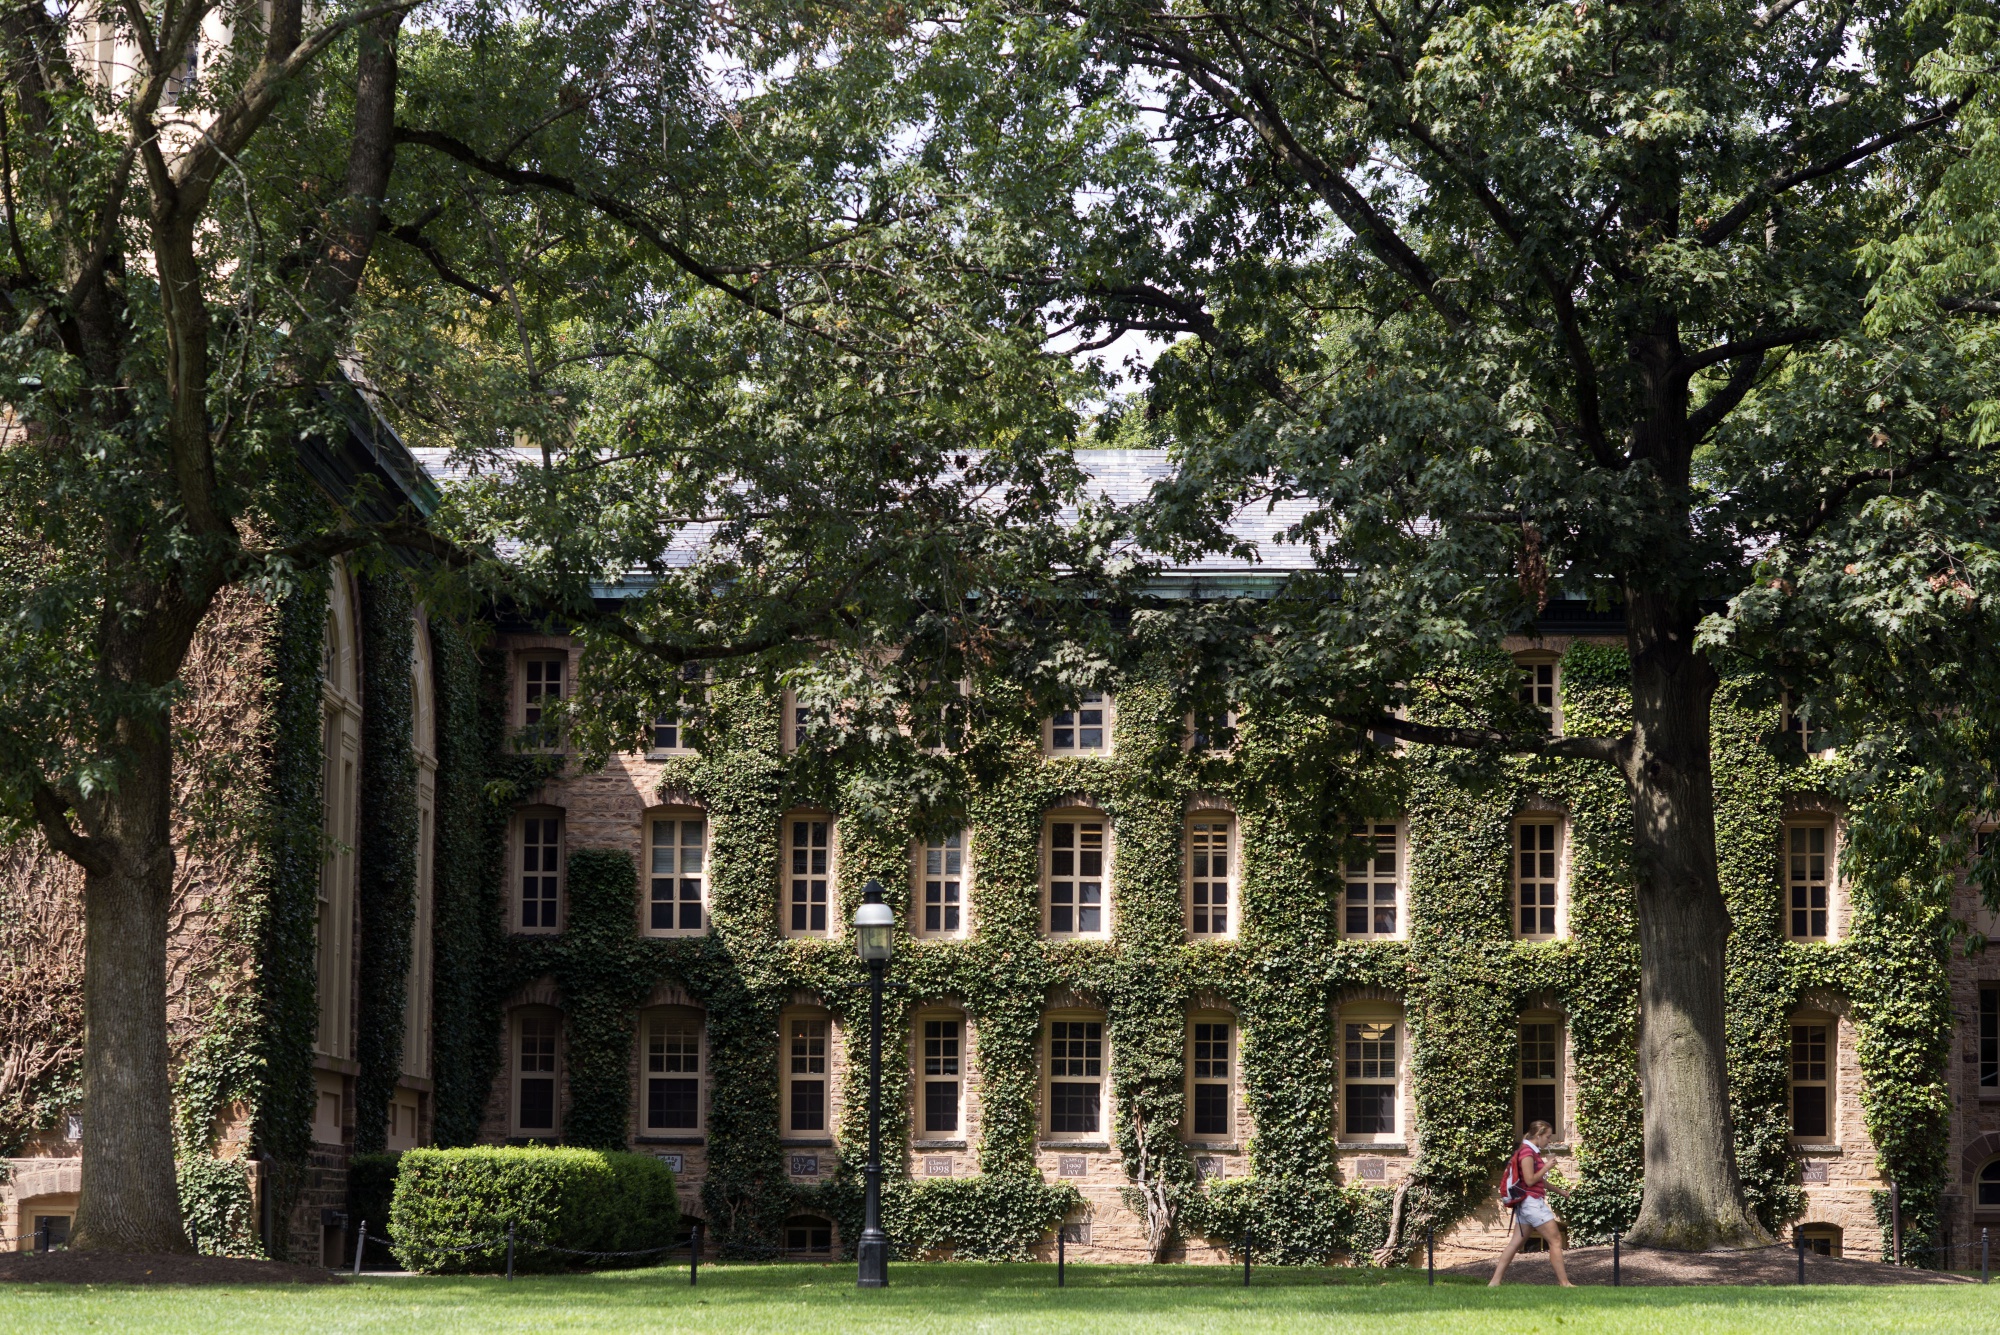 The Princeton University campus in Princeton, New Jersey.